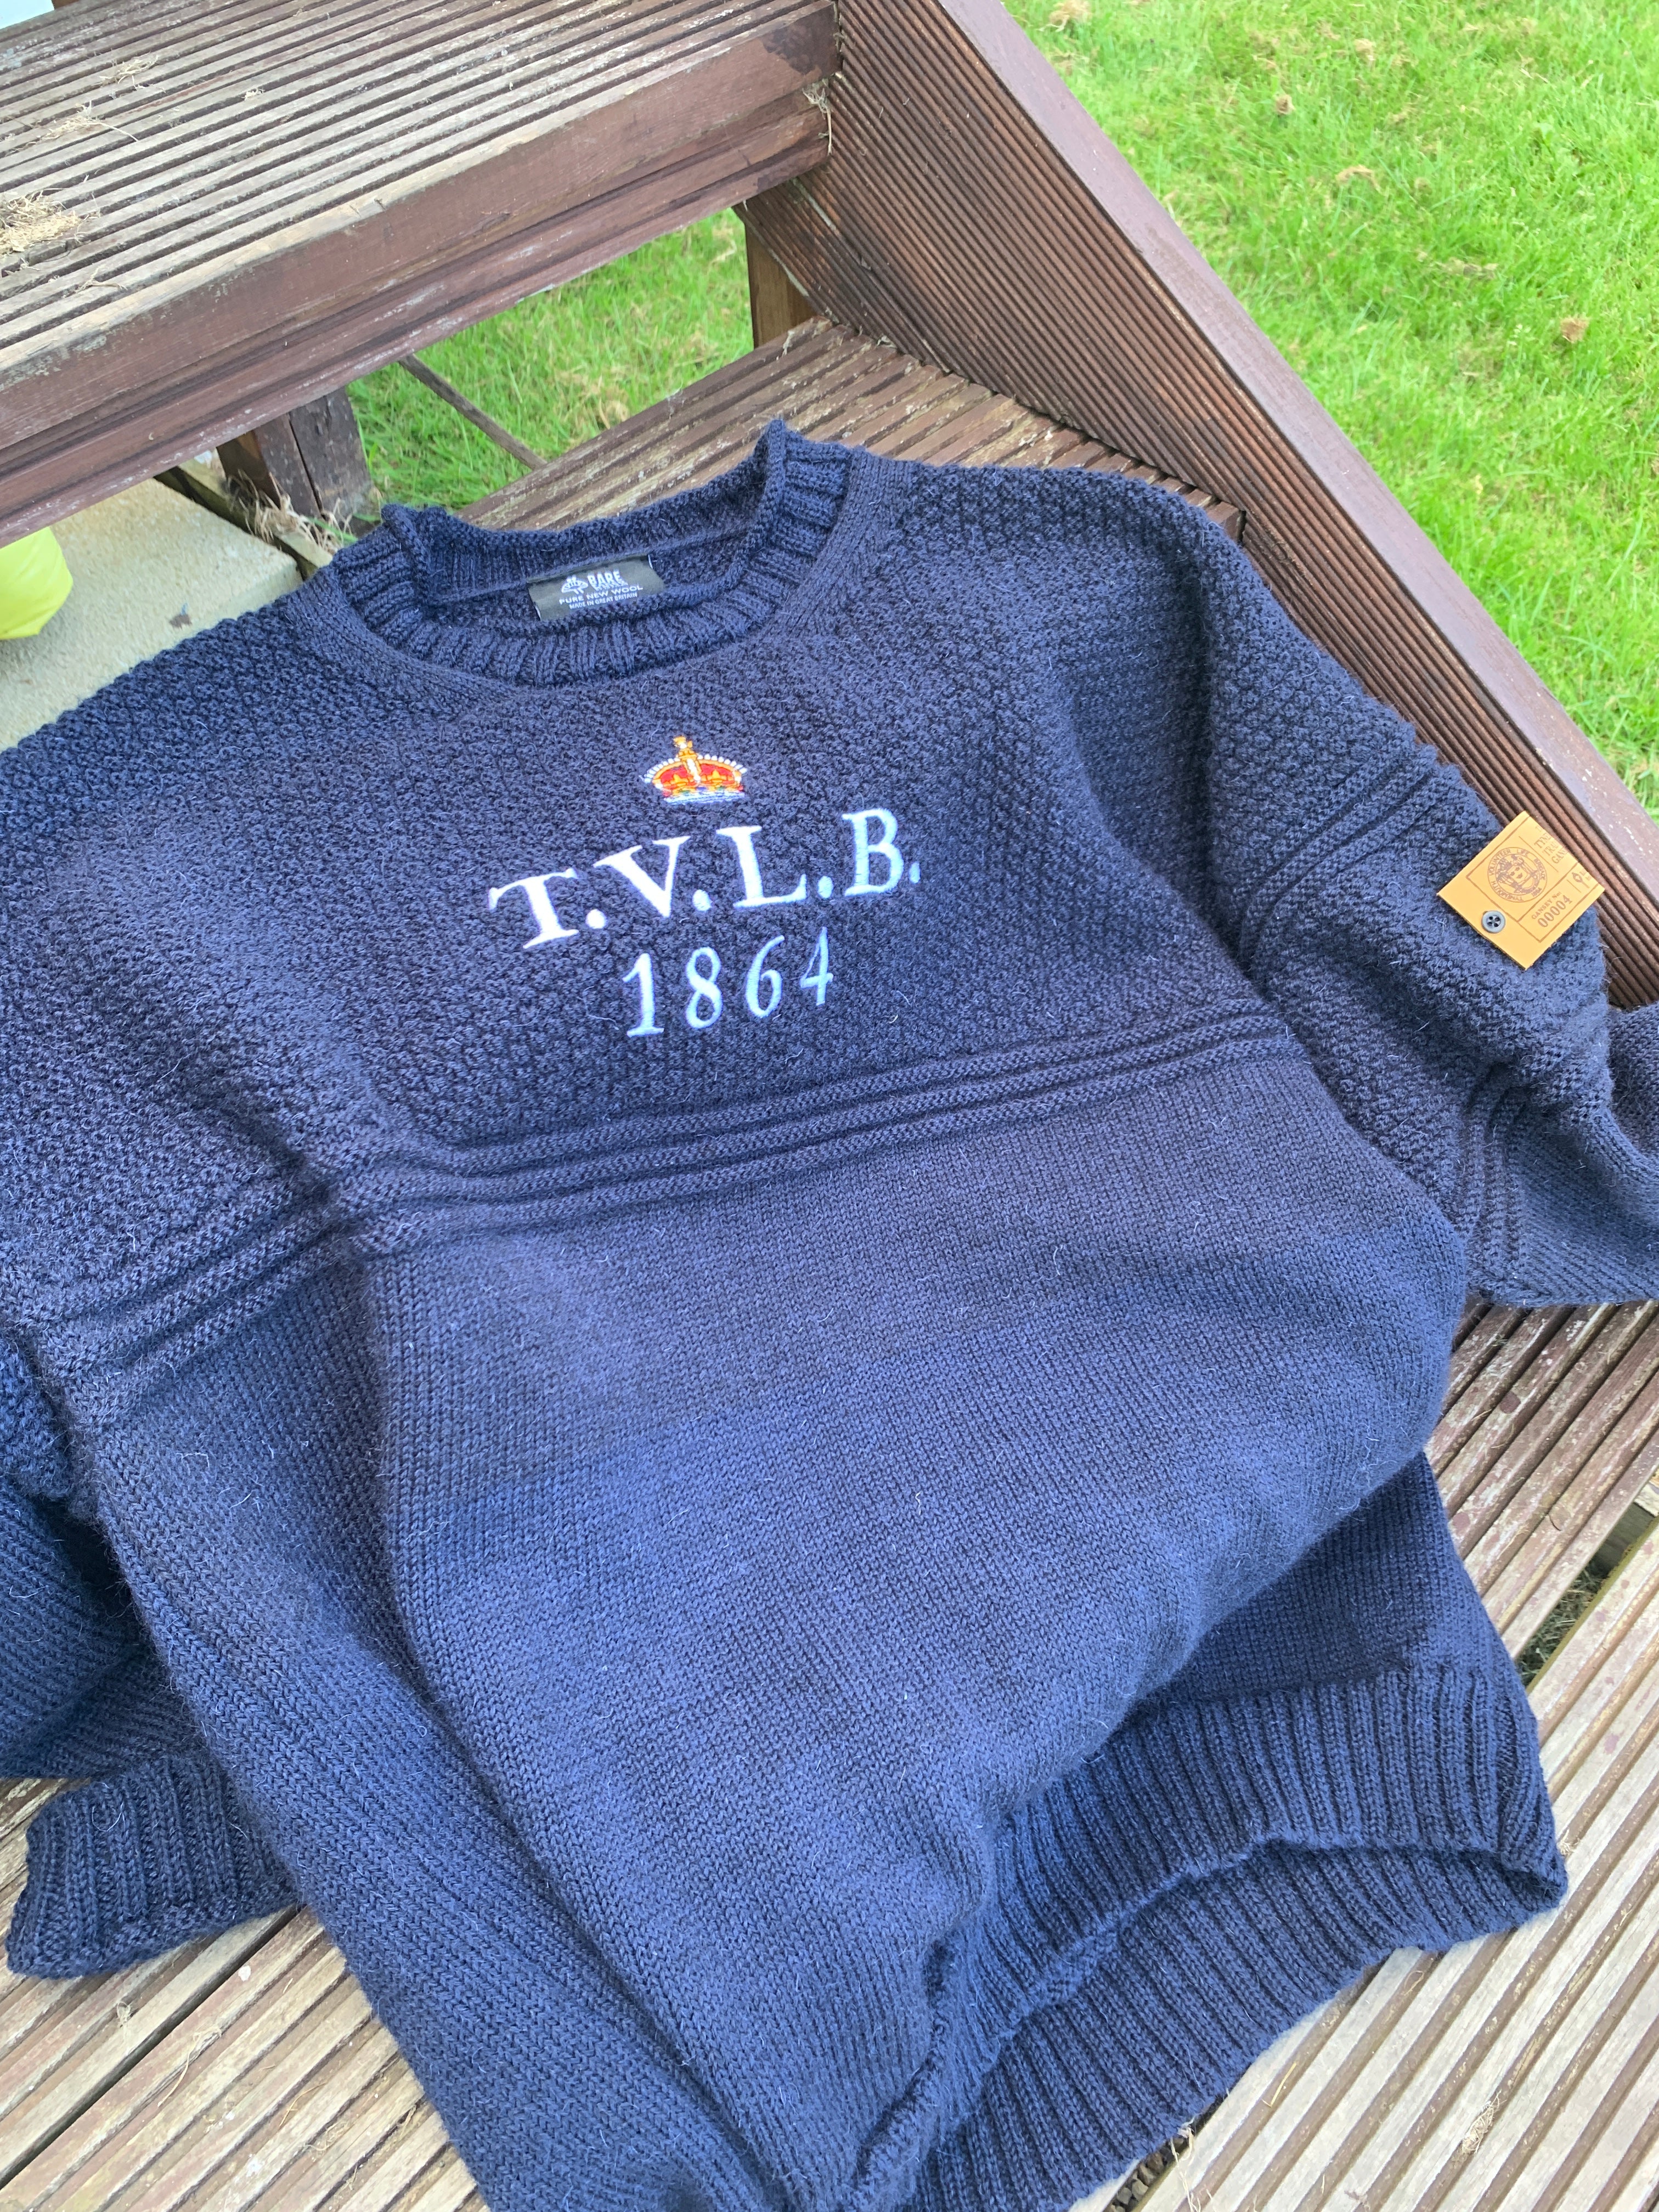 T.V.L.B British Wool Gansey Sweater